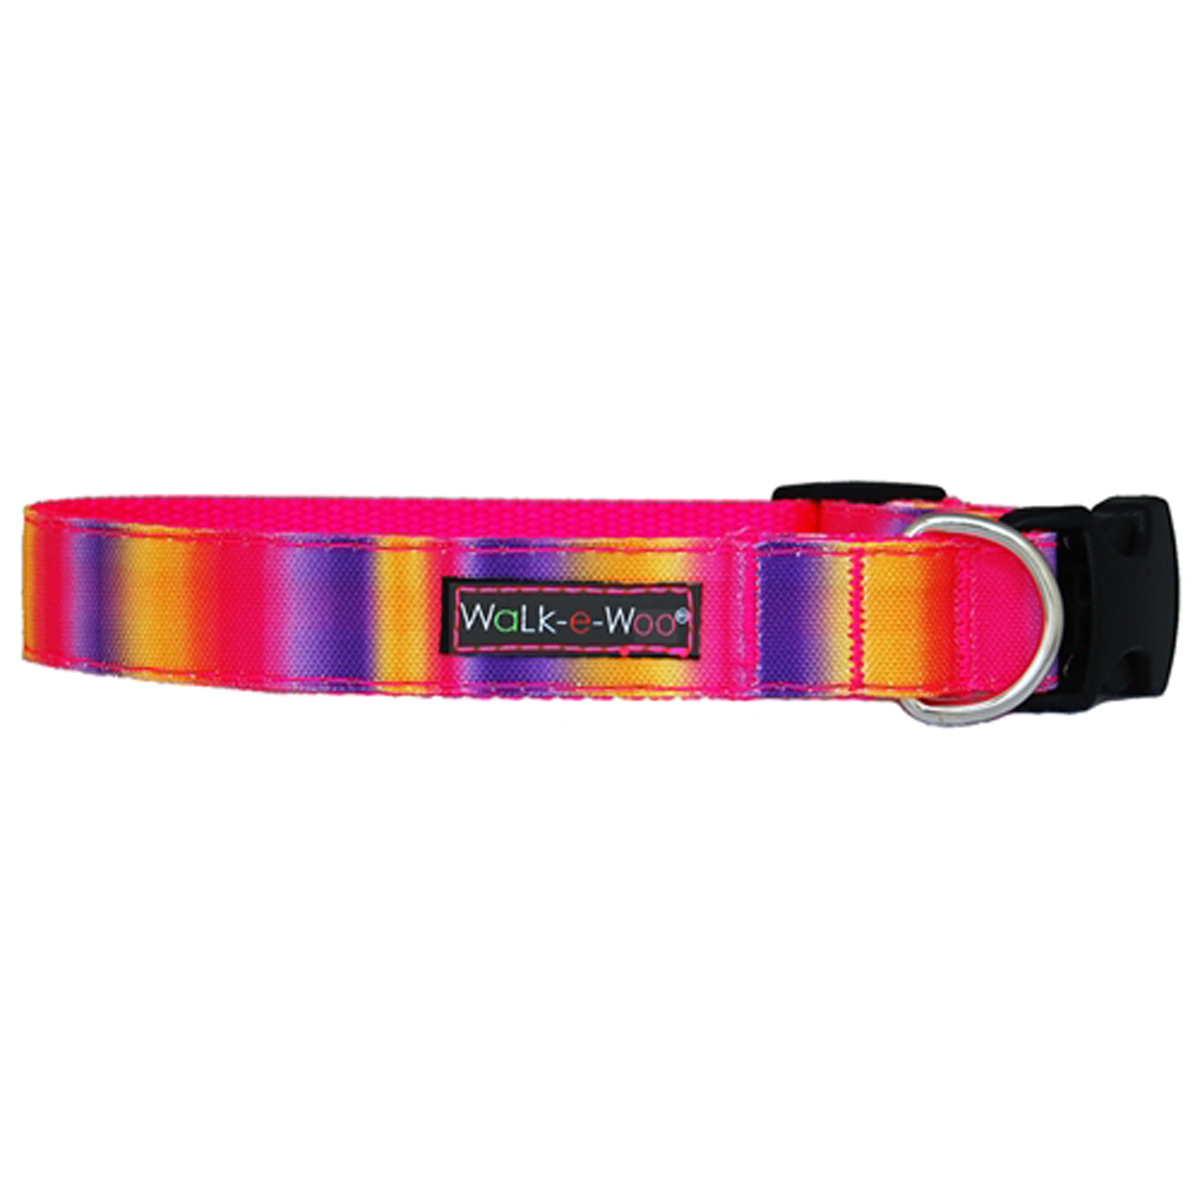 WaLk-e-Woo Tie Dye Dog Collar - Pink/Purple